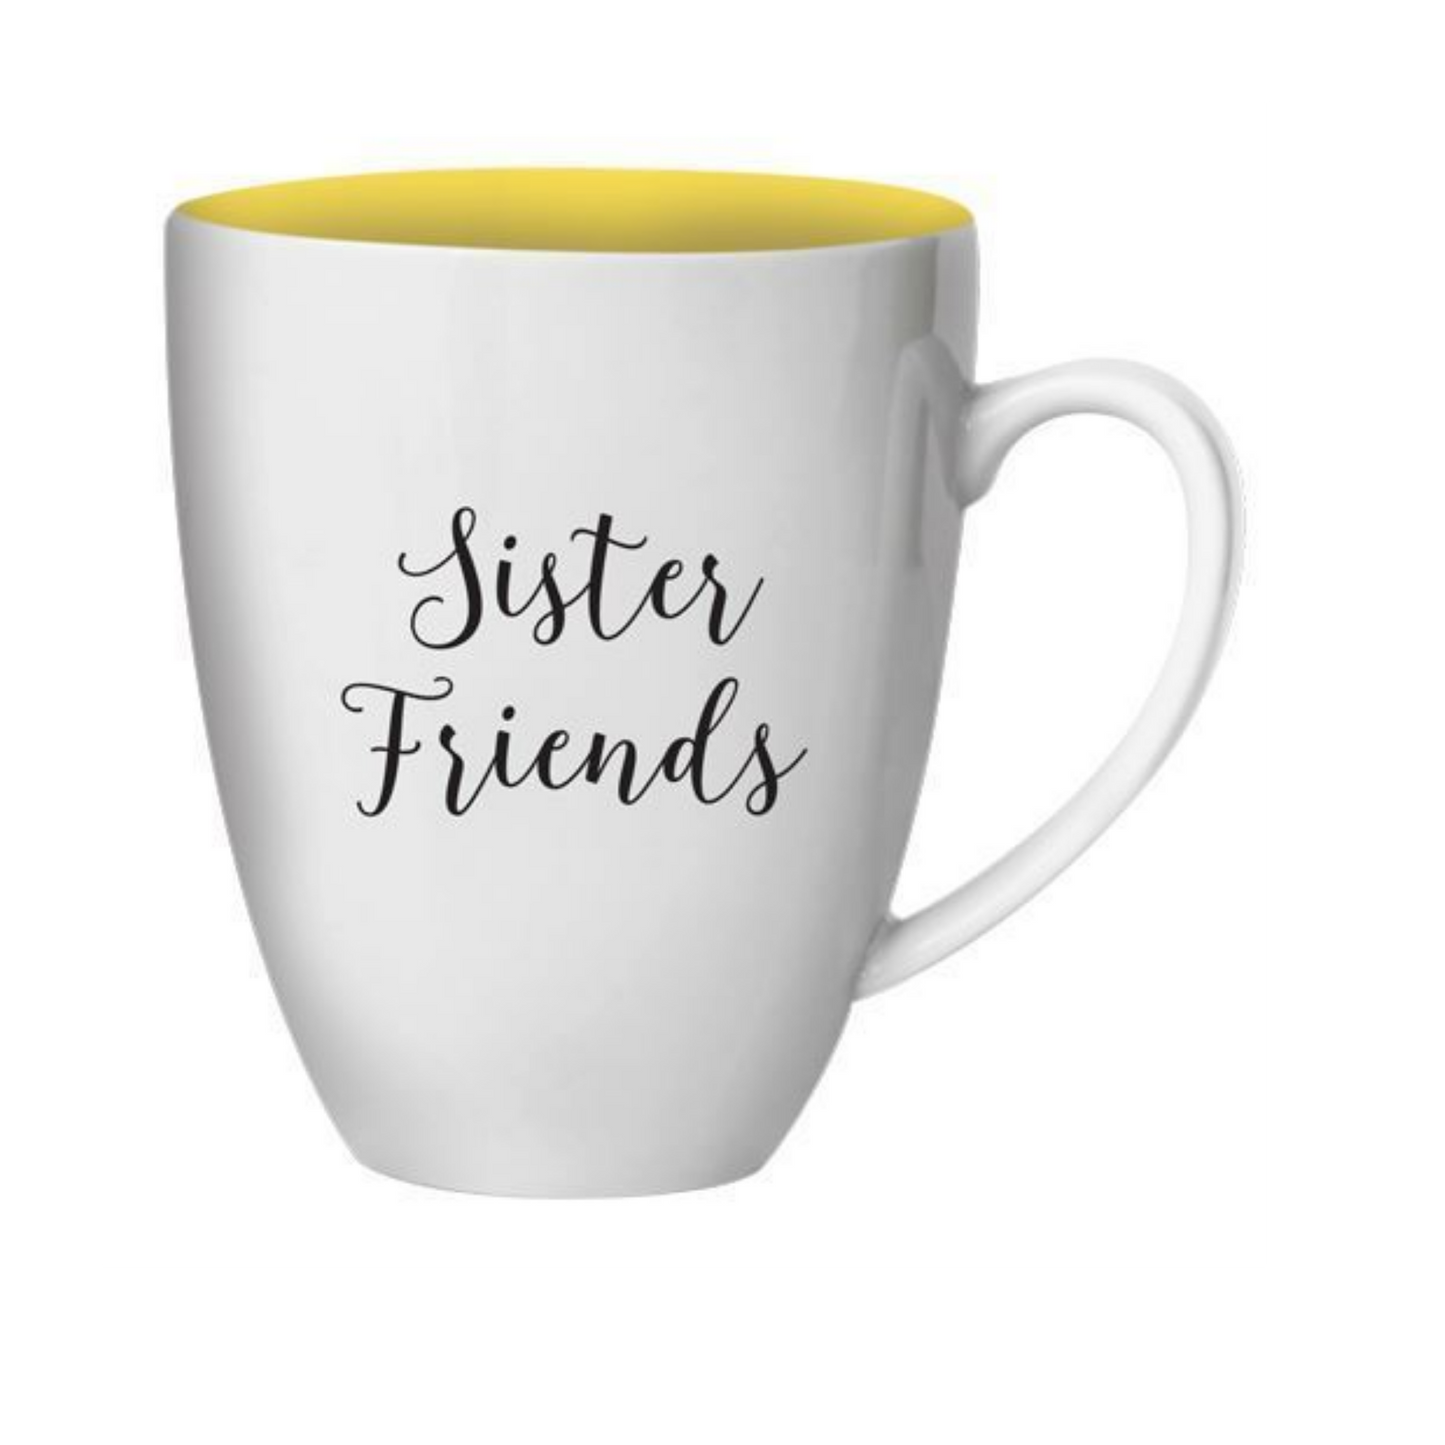 Sister Friends Mug